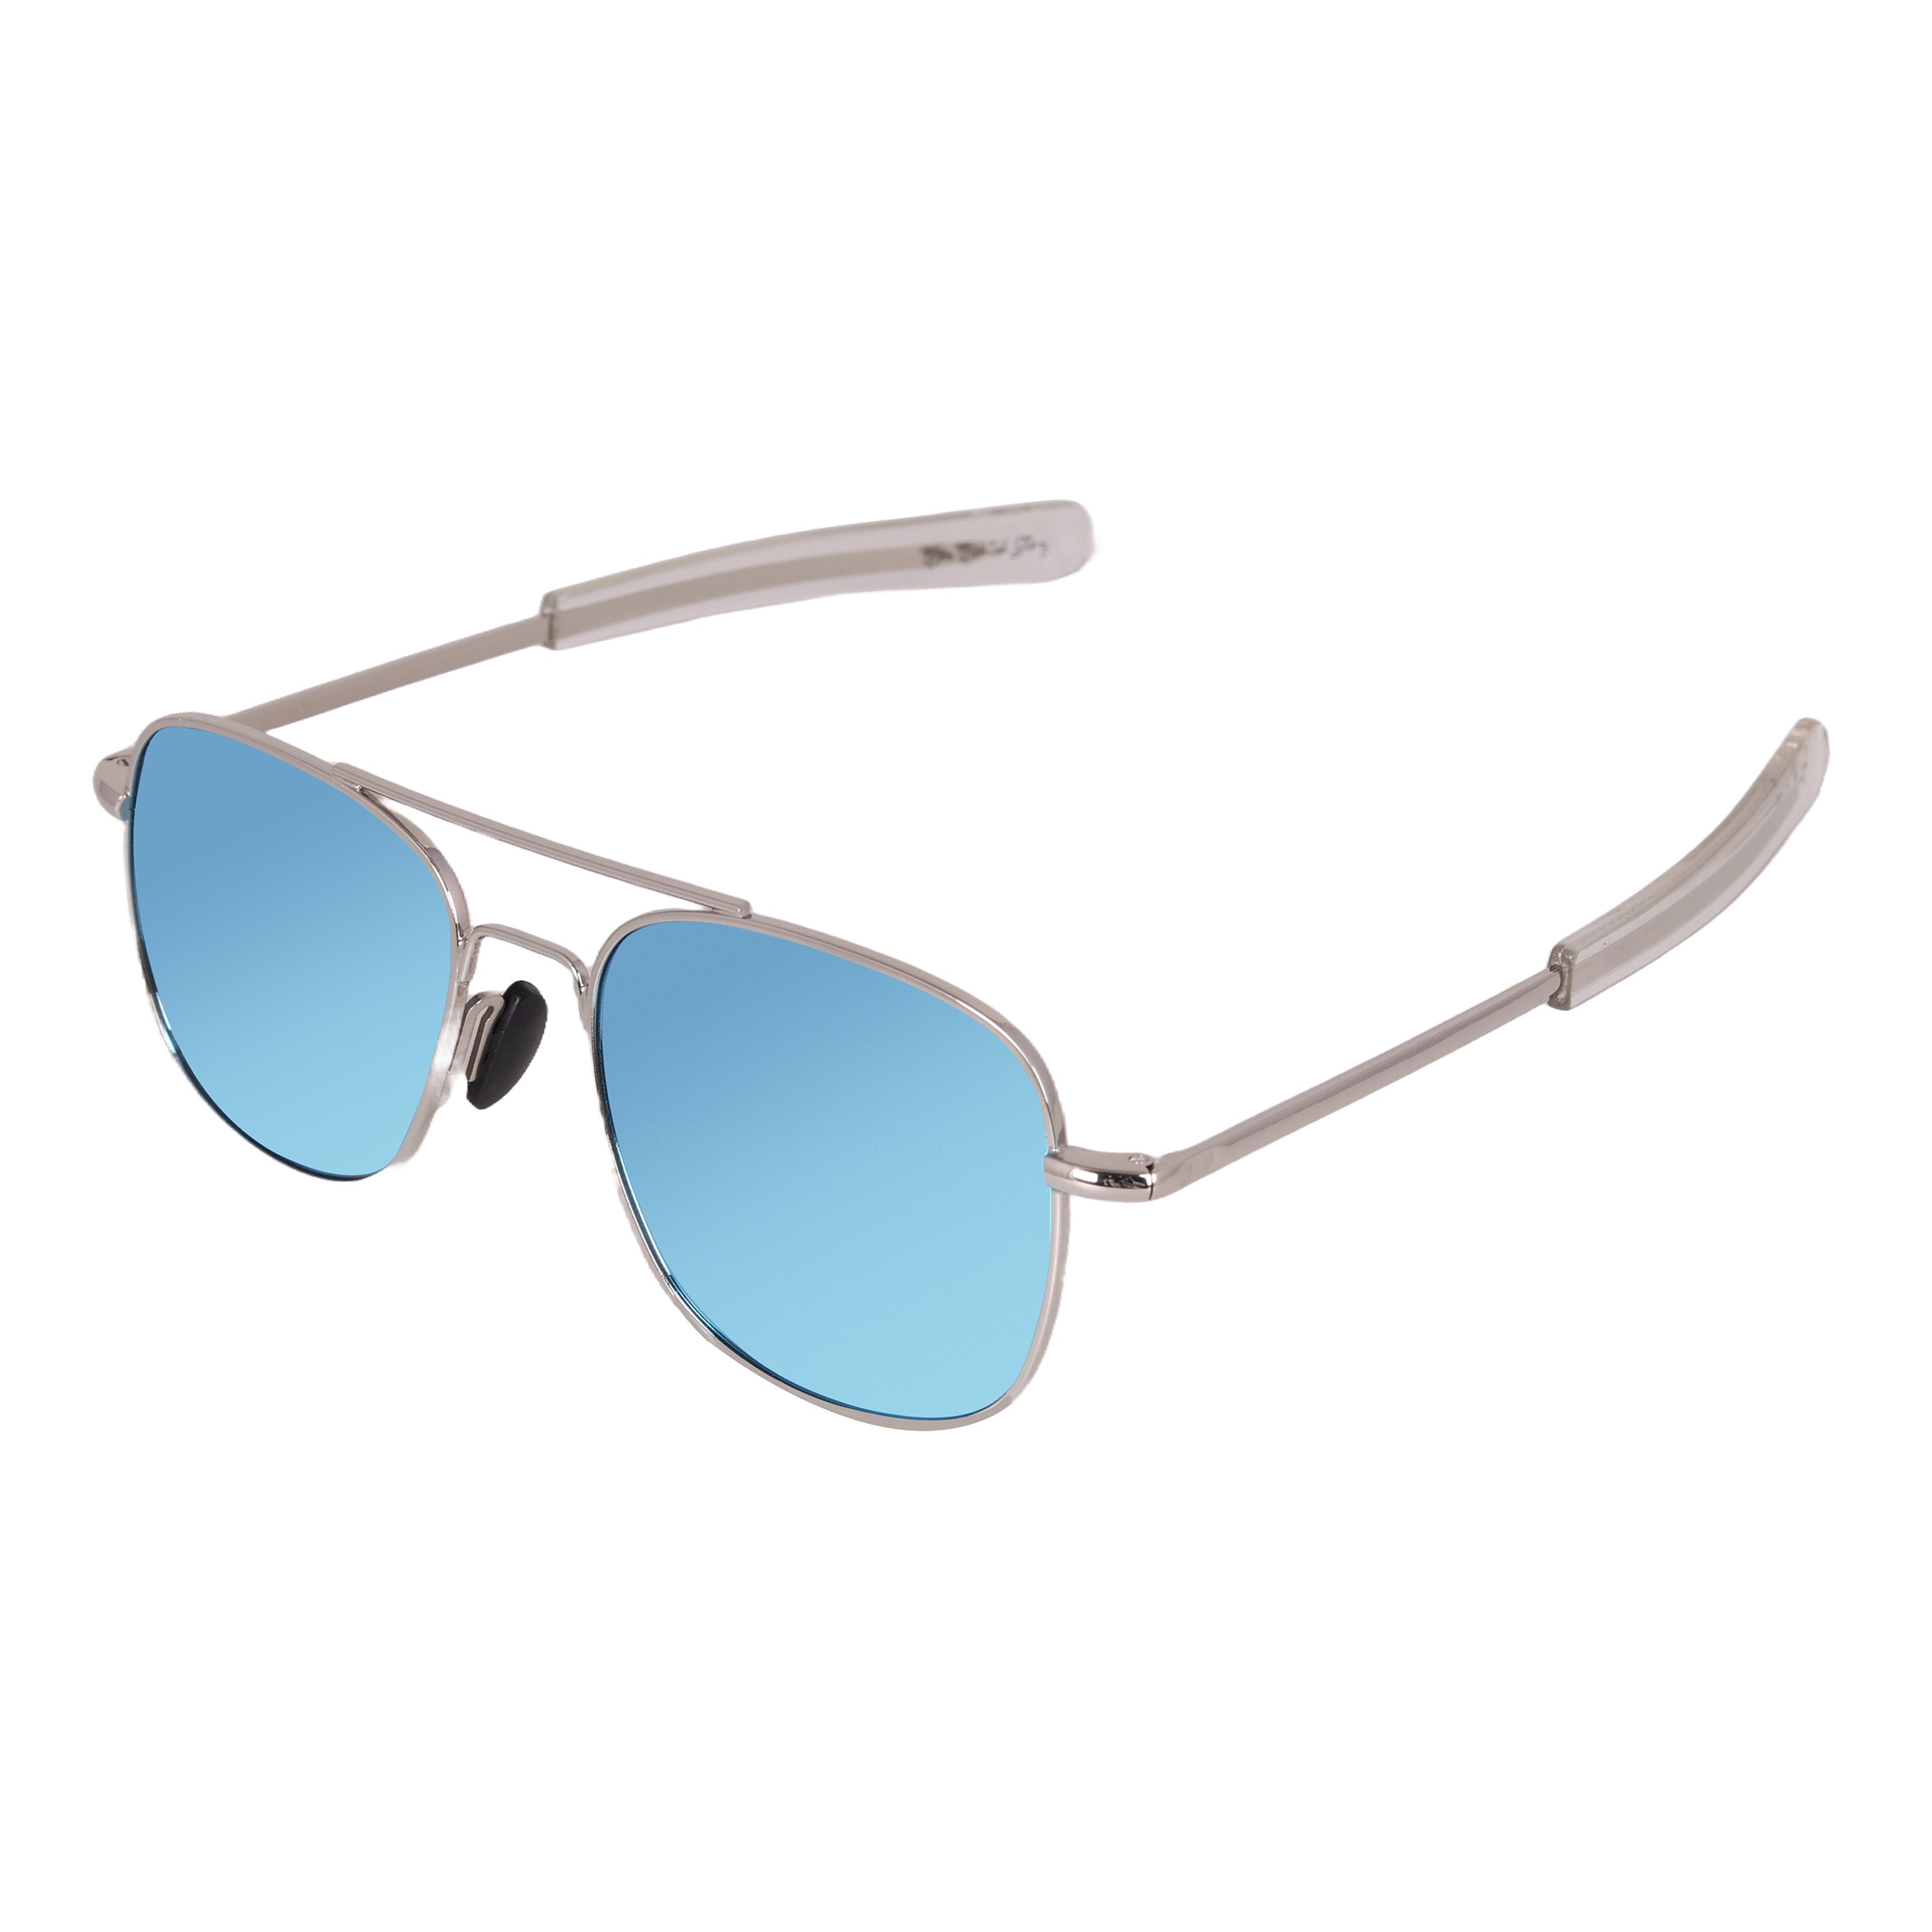 Royce Aviator Sunglasses